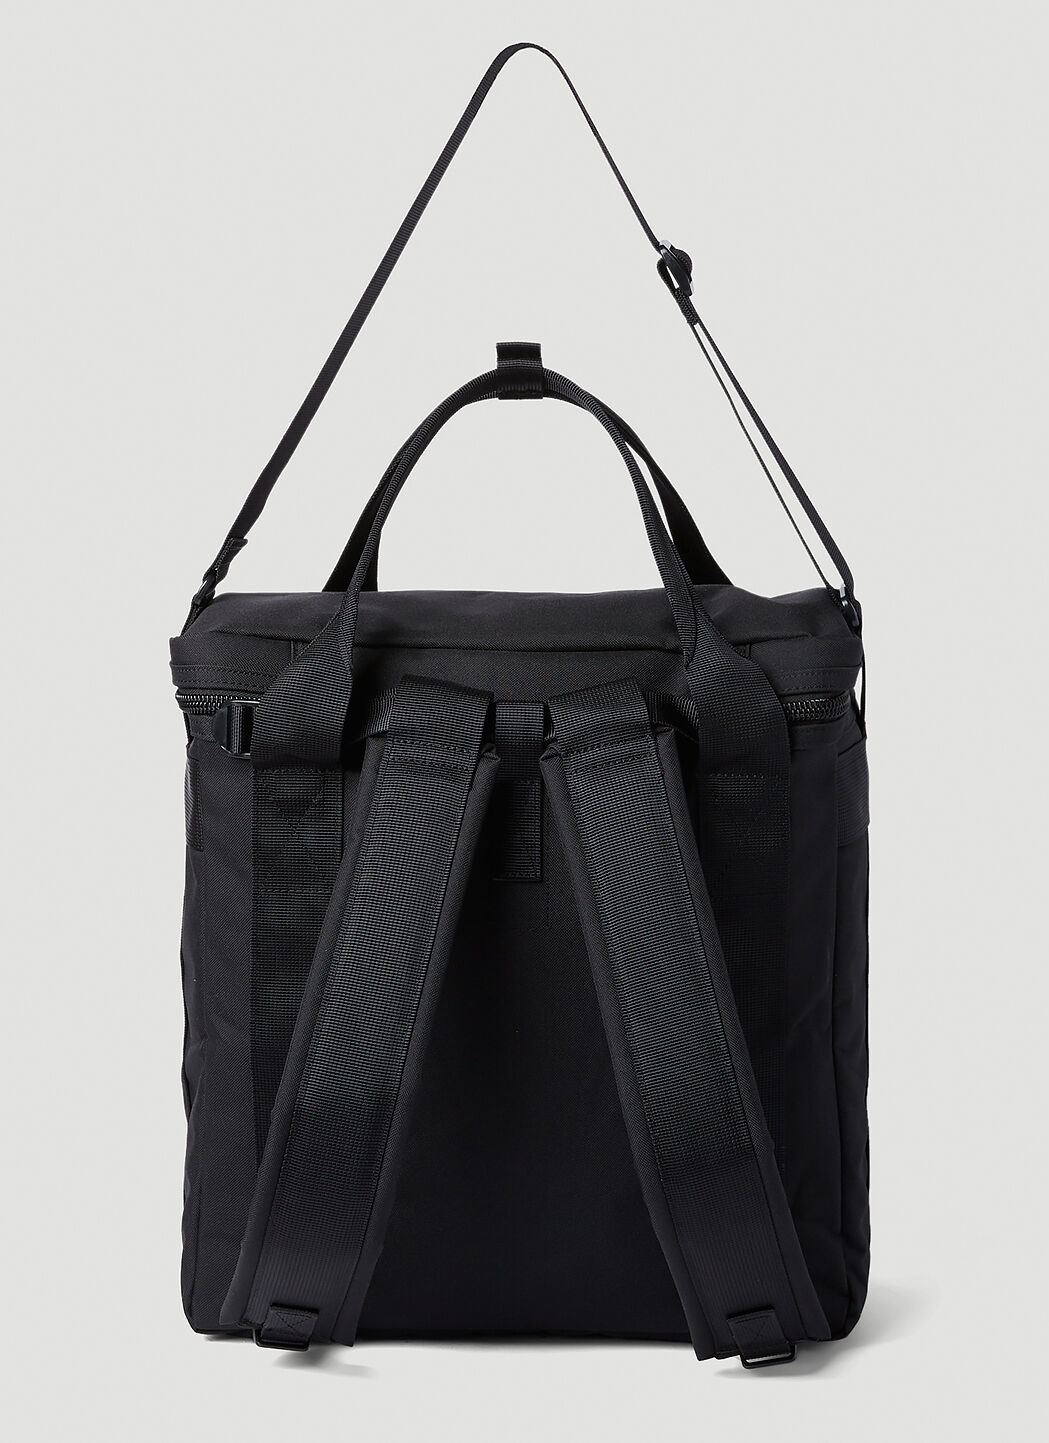 Porter-Yoshida & Co Union Record Backpack in Black | LN-CC®